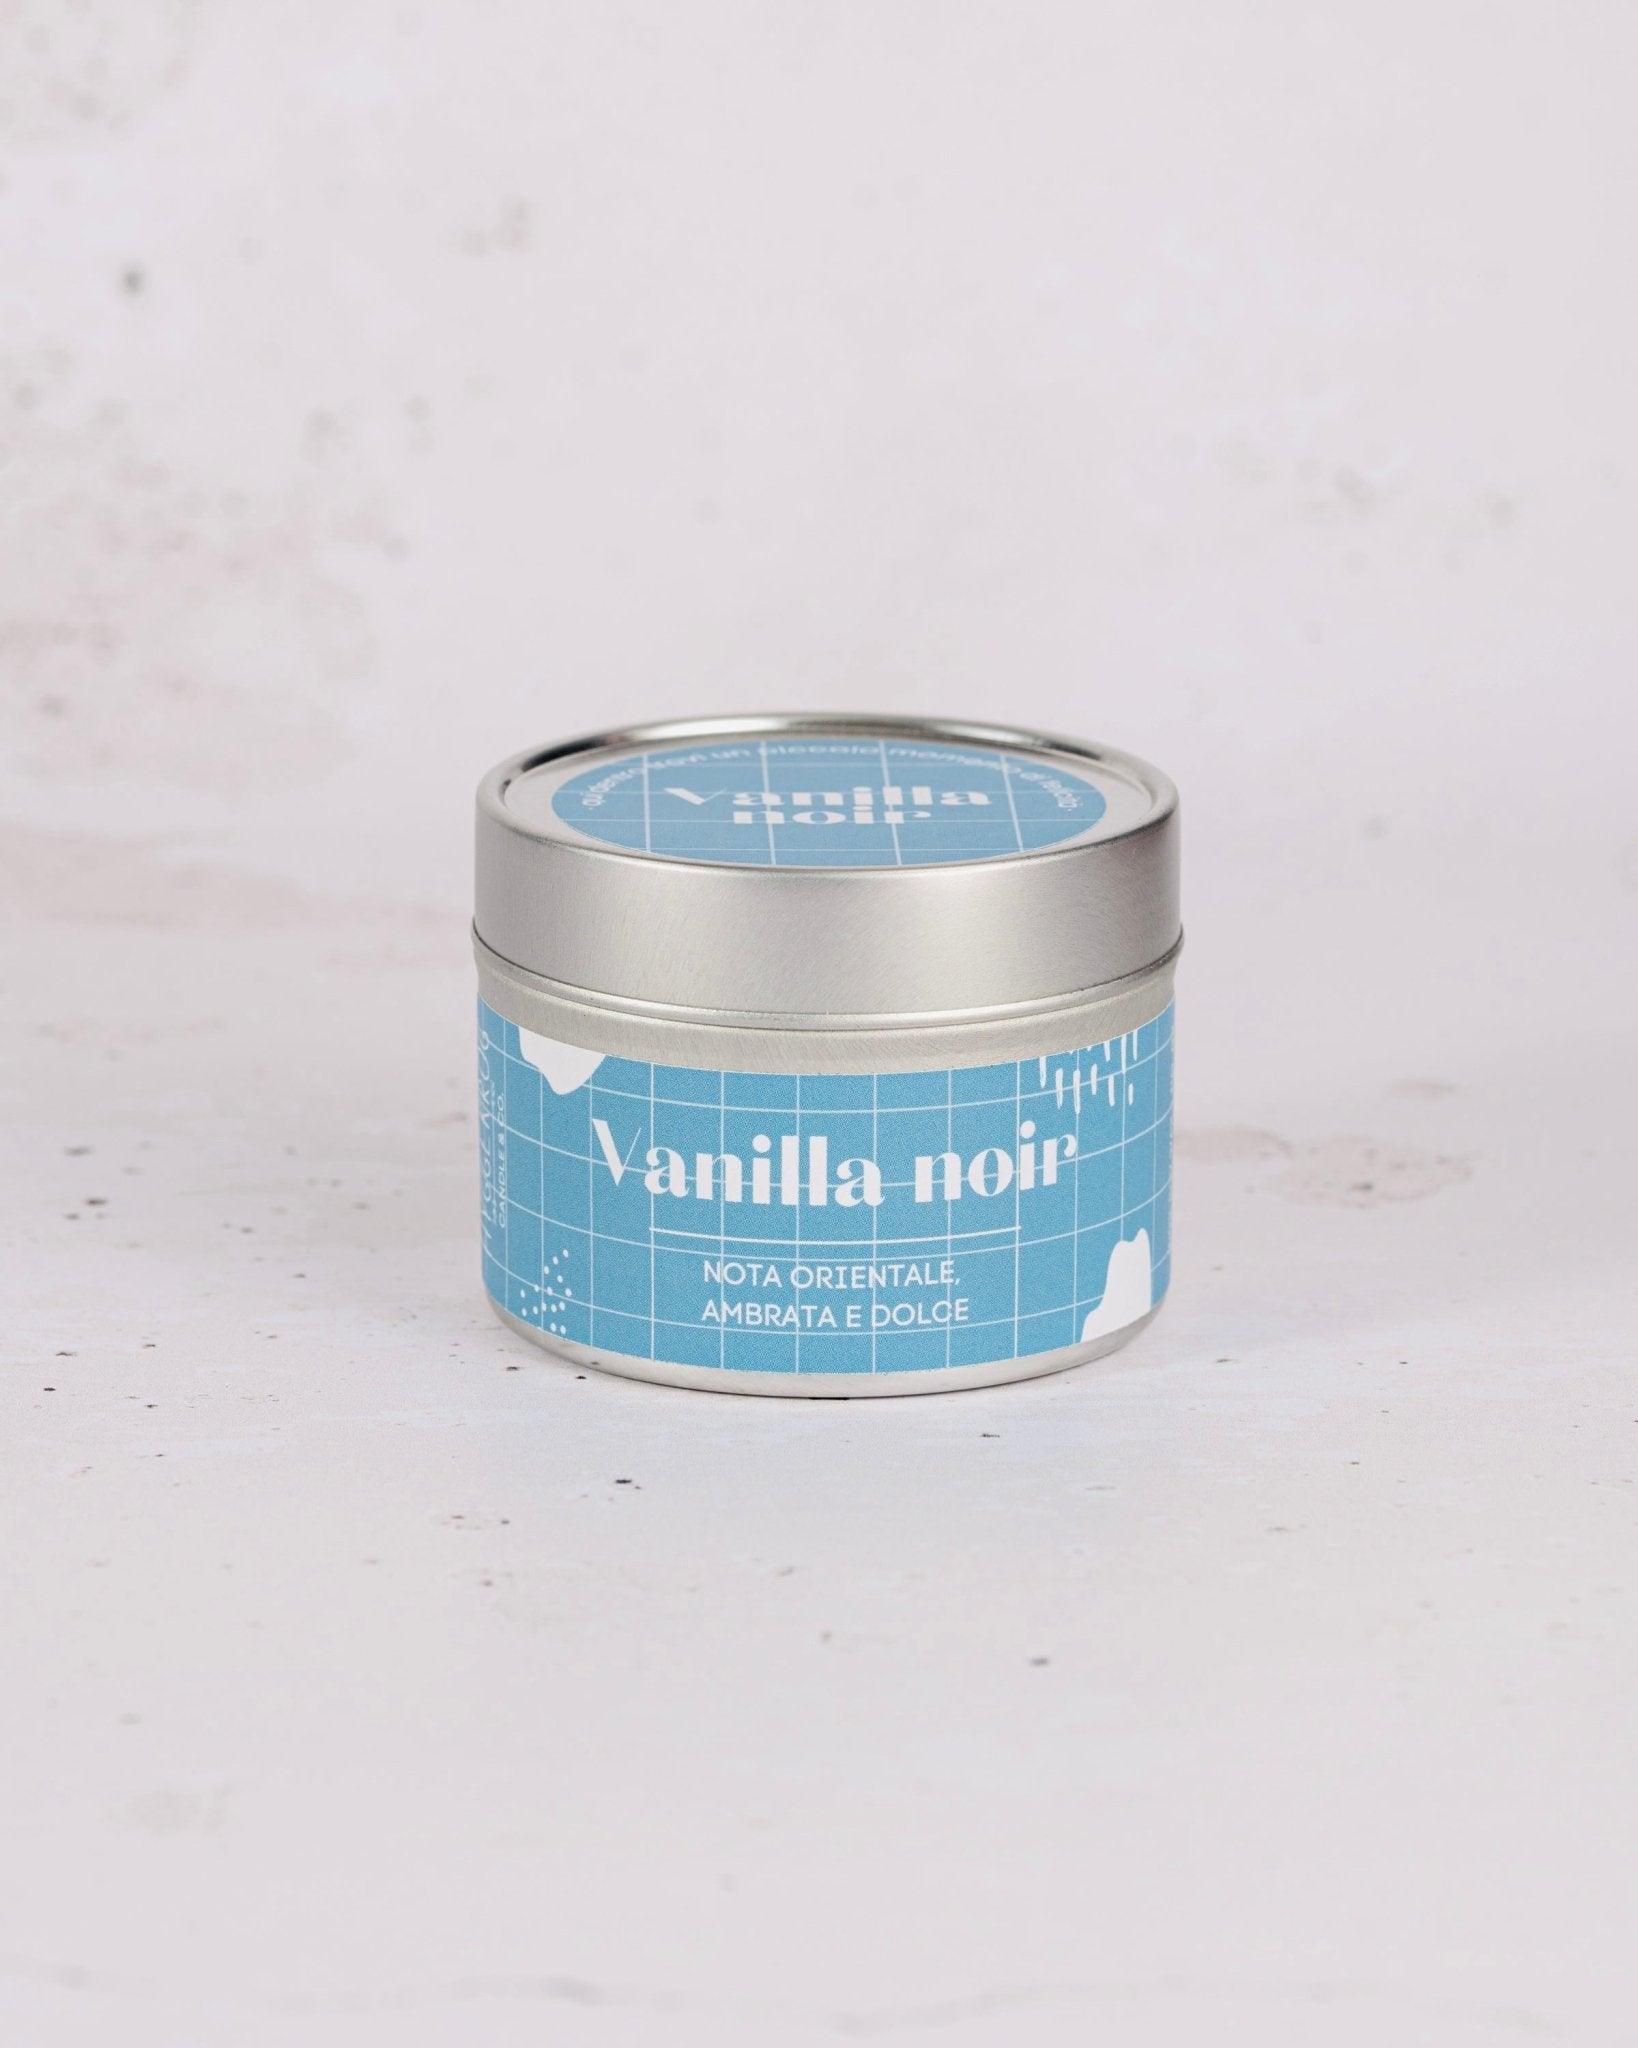 Candela Vanilla noir | vaniglia nera e sandalo - Hyggekrog - Candle&Co